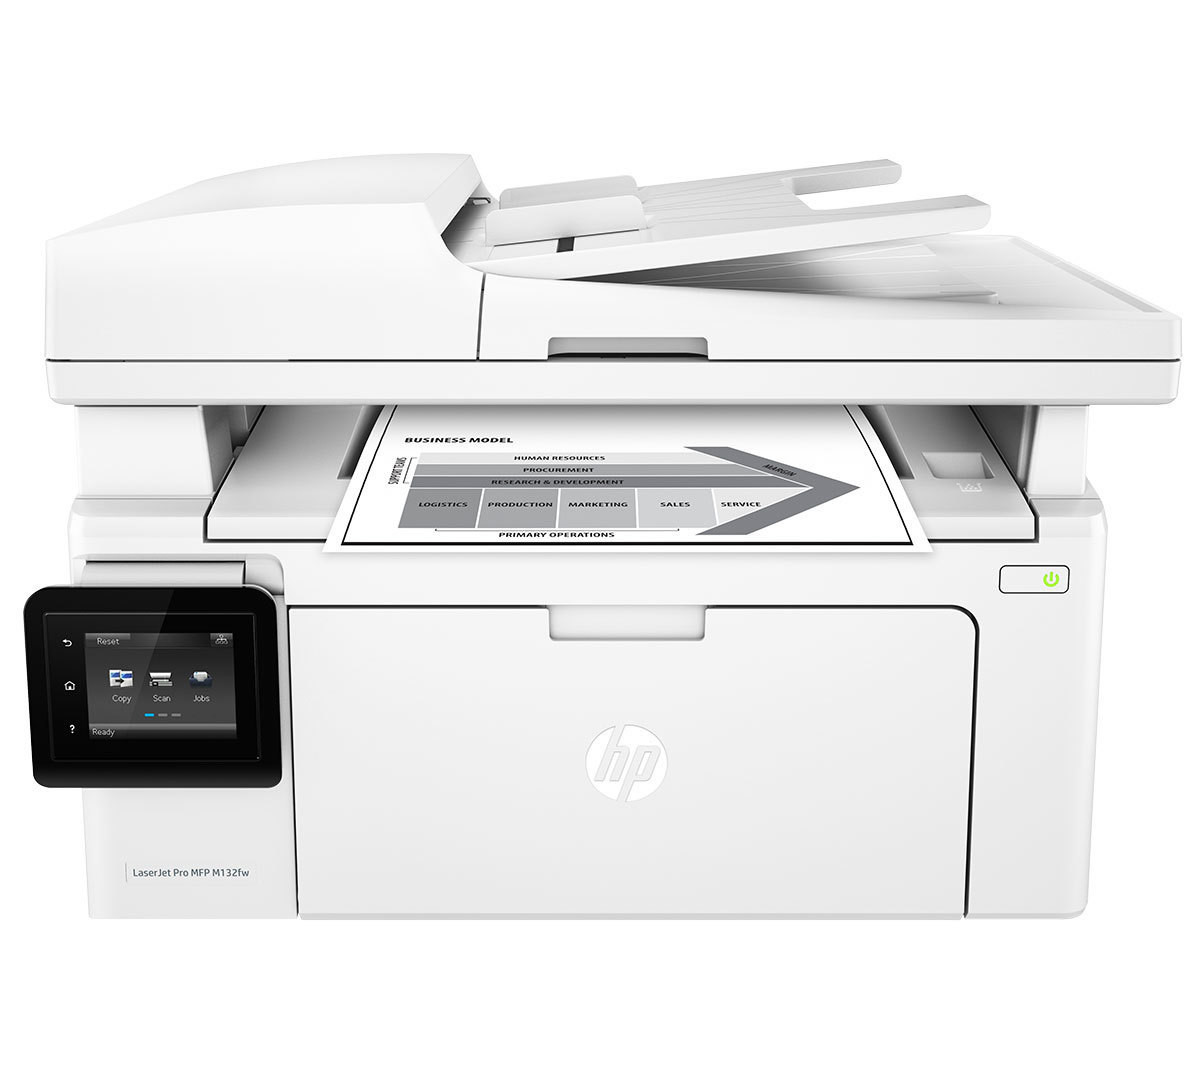 HP M132fw Black on White Laser Printer, PSC, Fax, Wifi